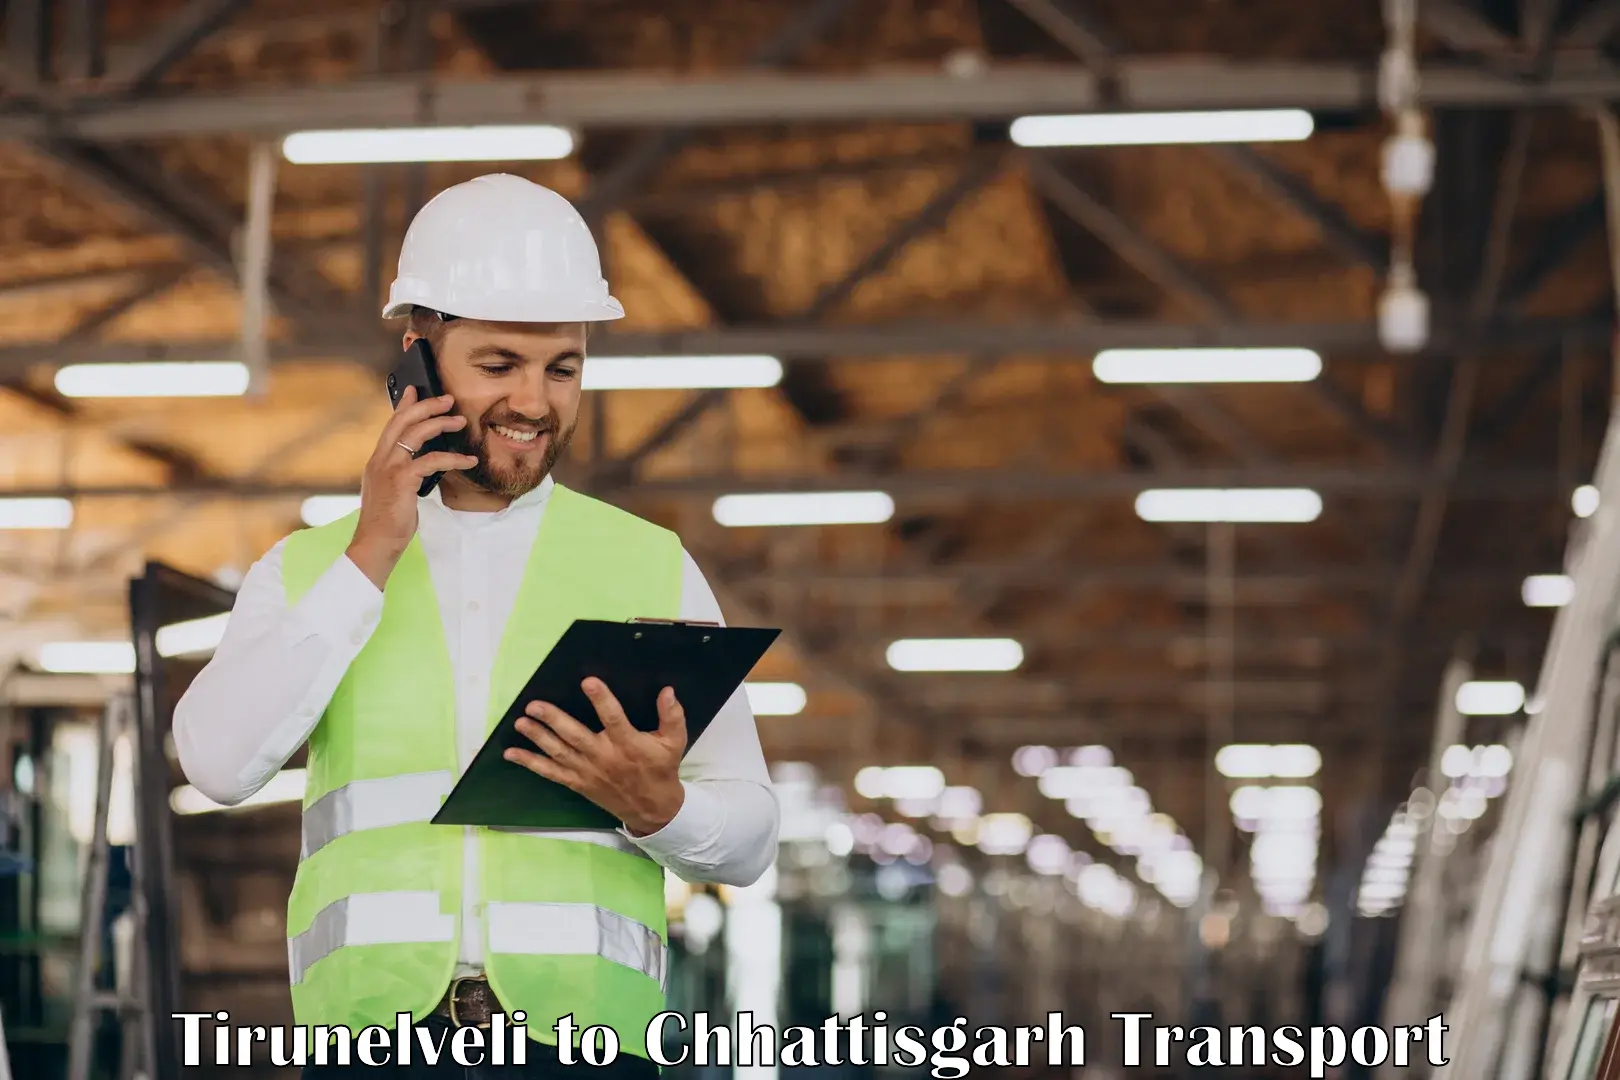 Cargo transport services in Tirunelveli to Chhattisgarh